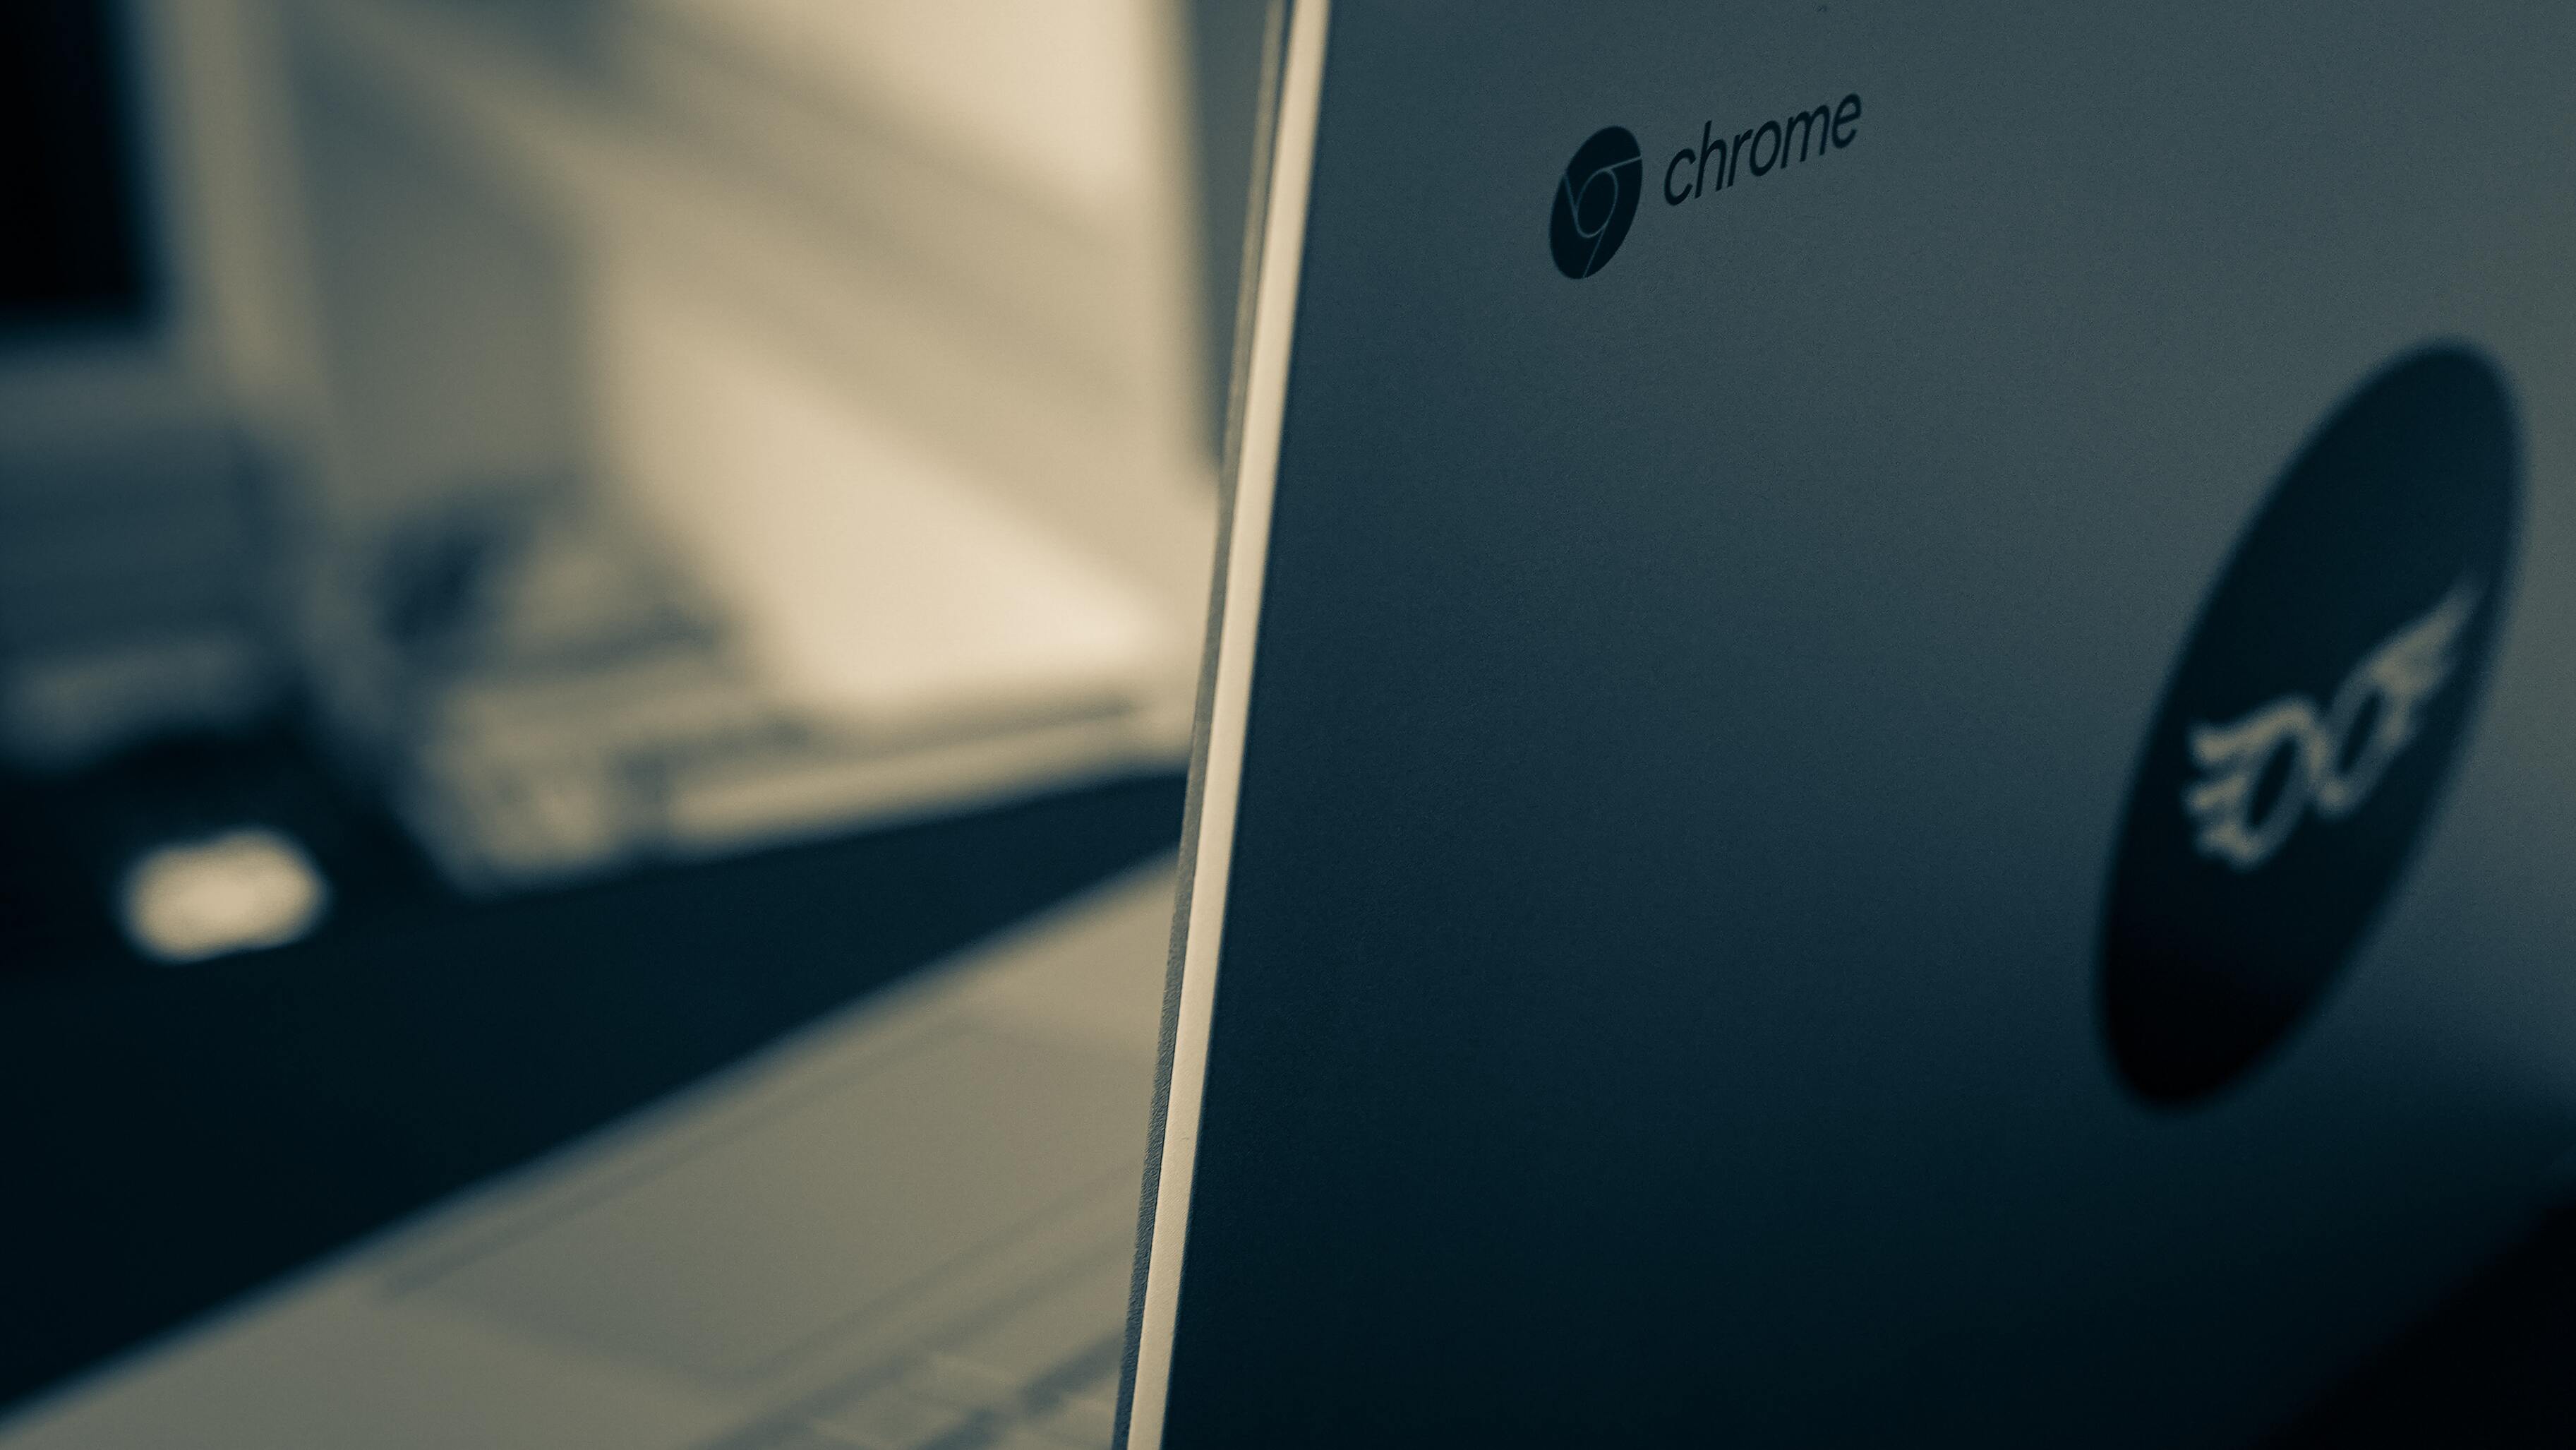   Chromebooks   Android 13